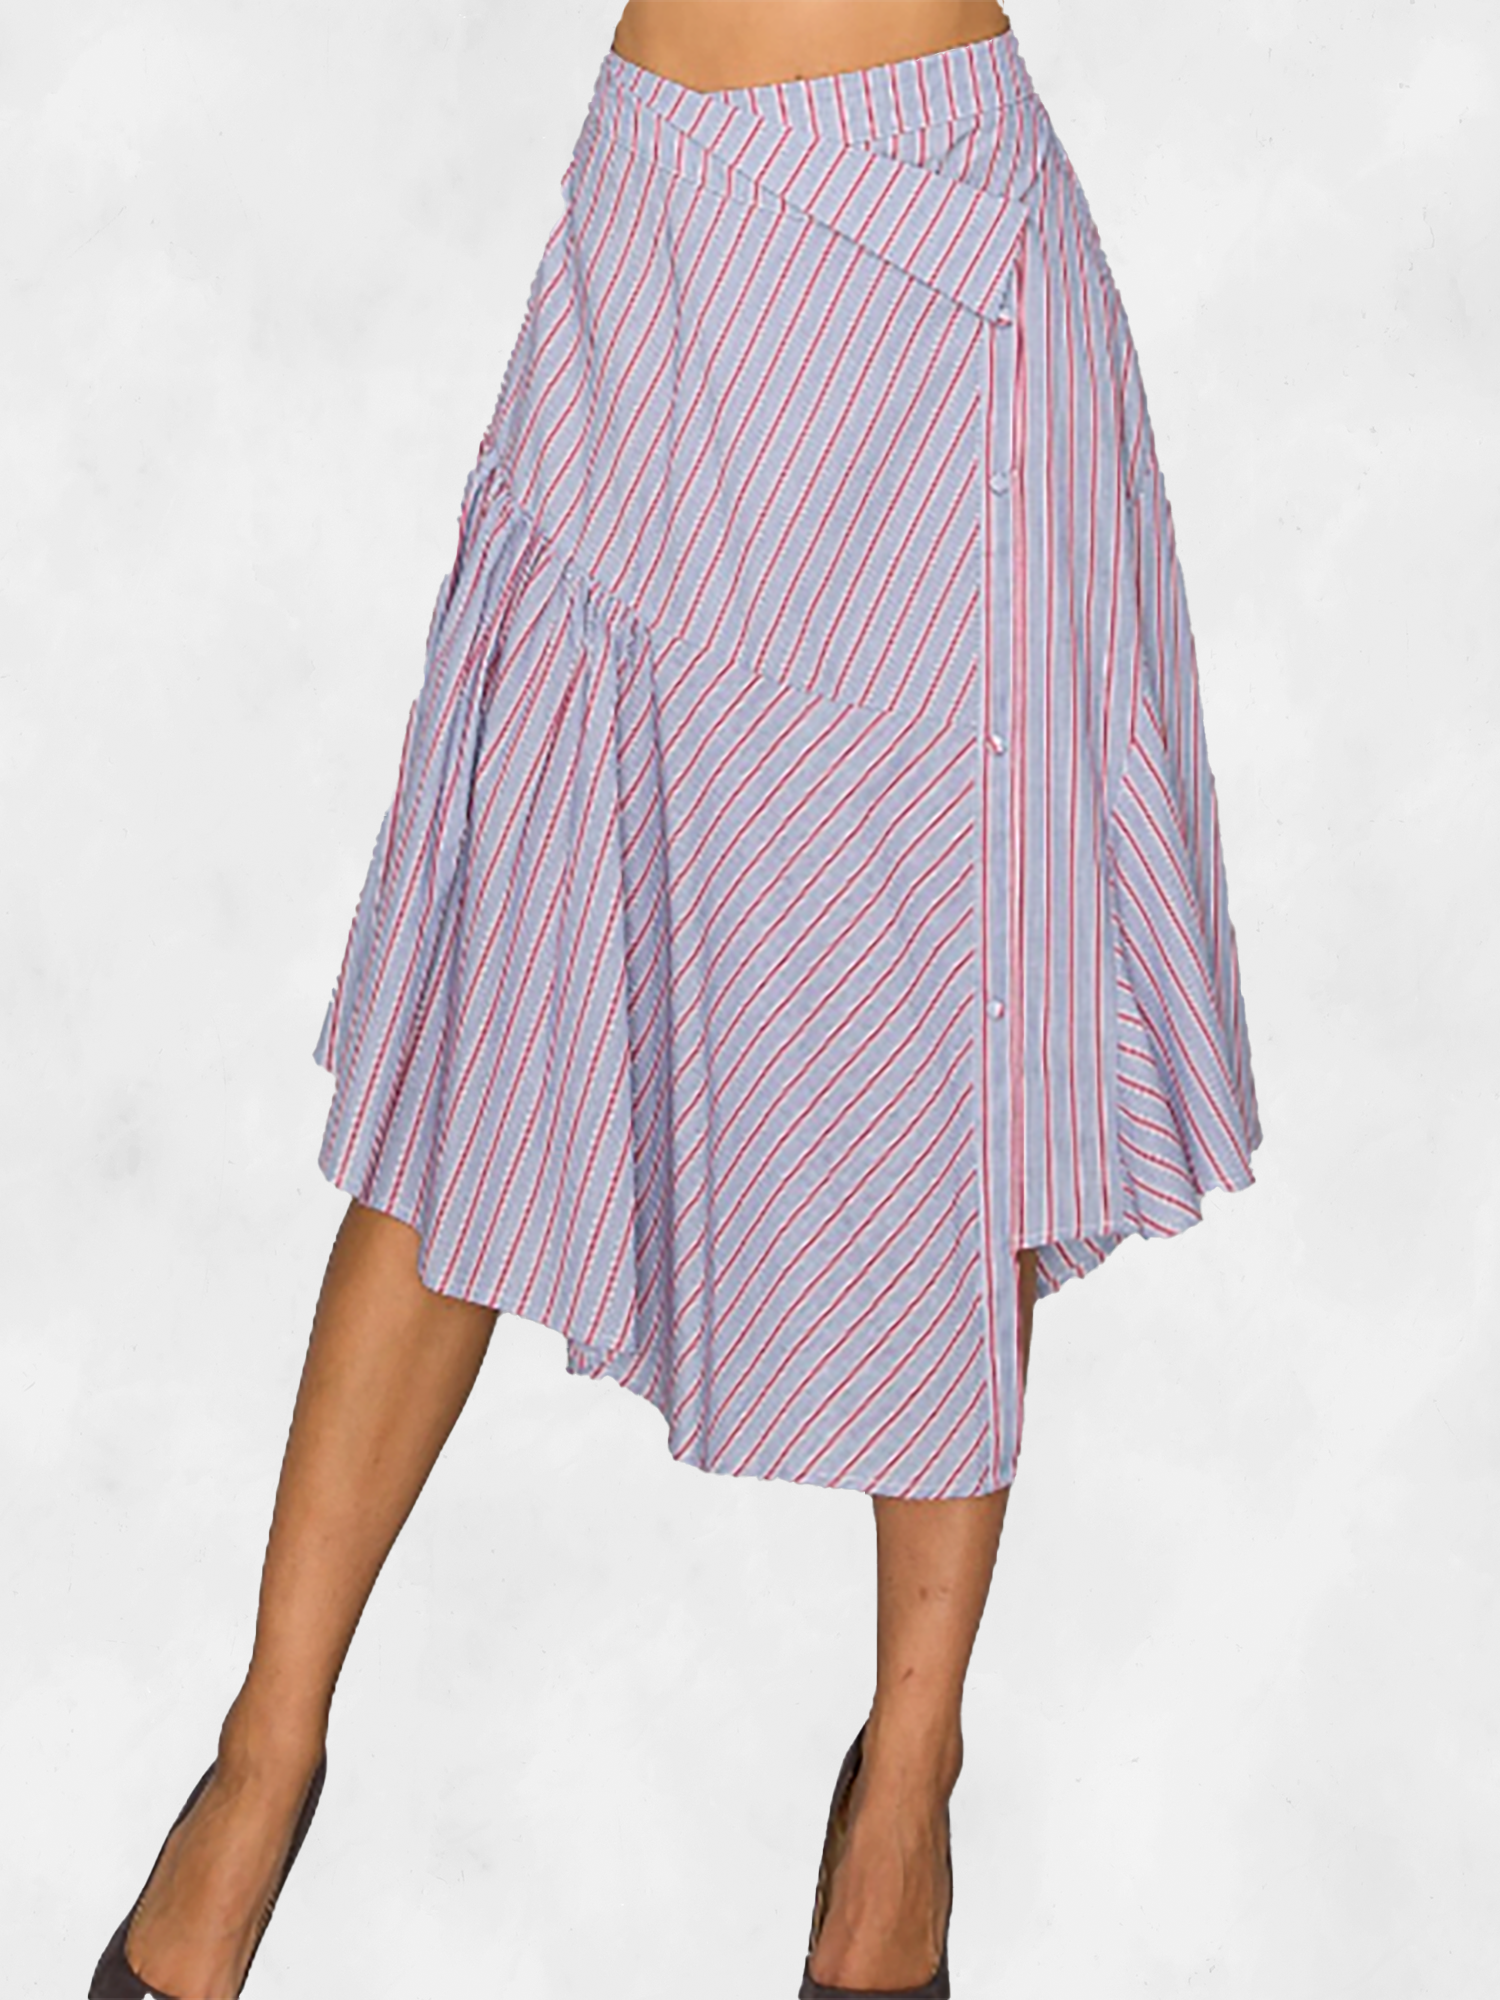 A.Peach Striped Knee Length Midi Skirt